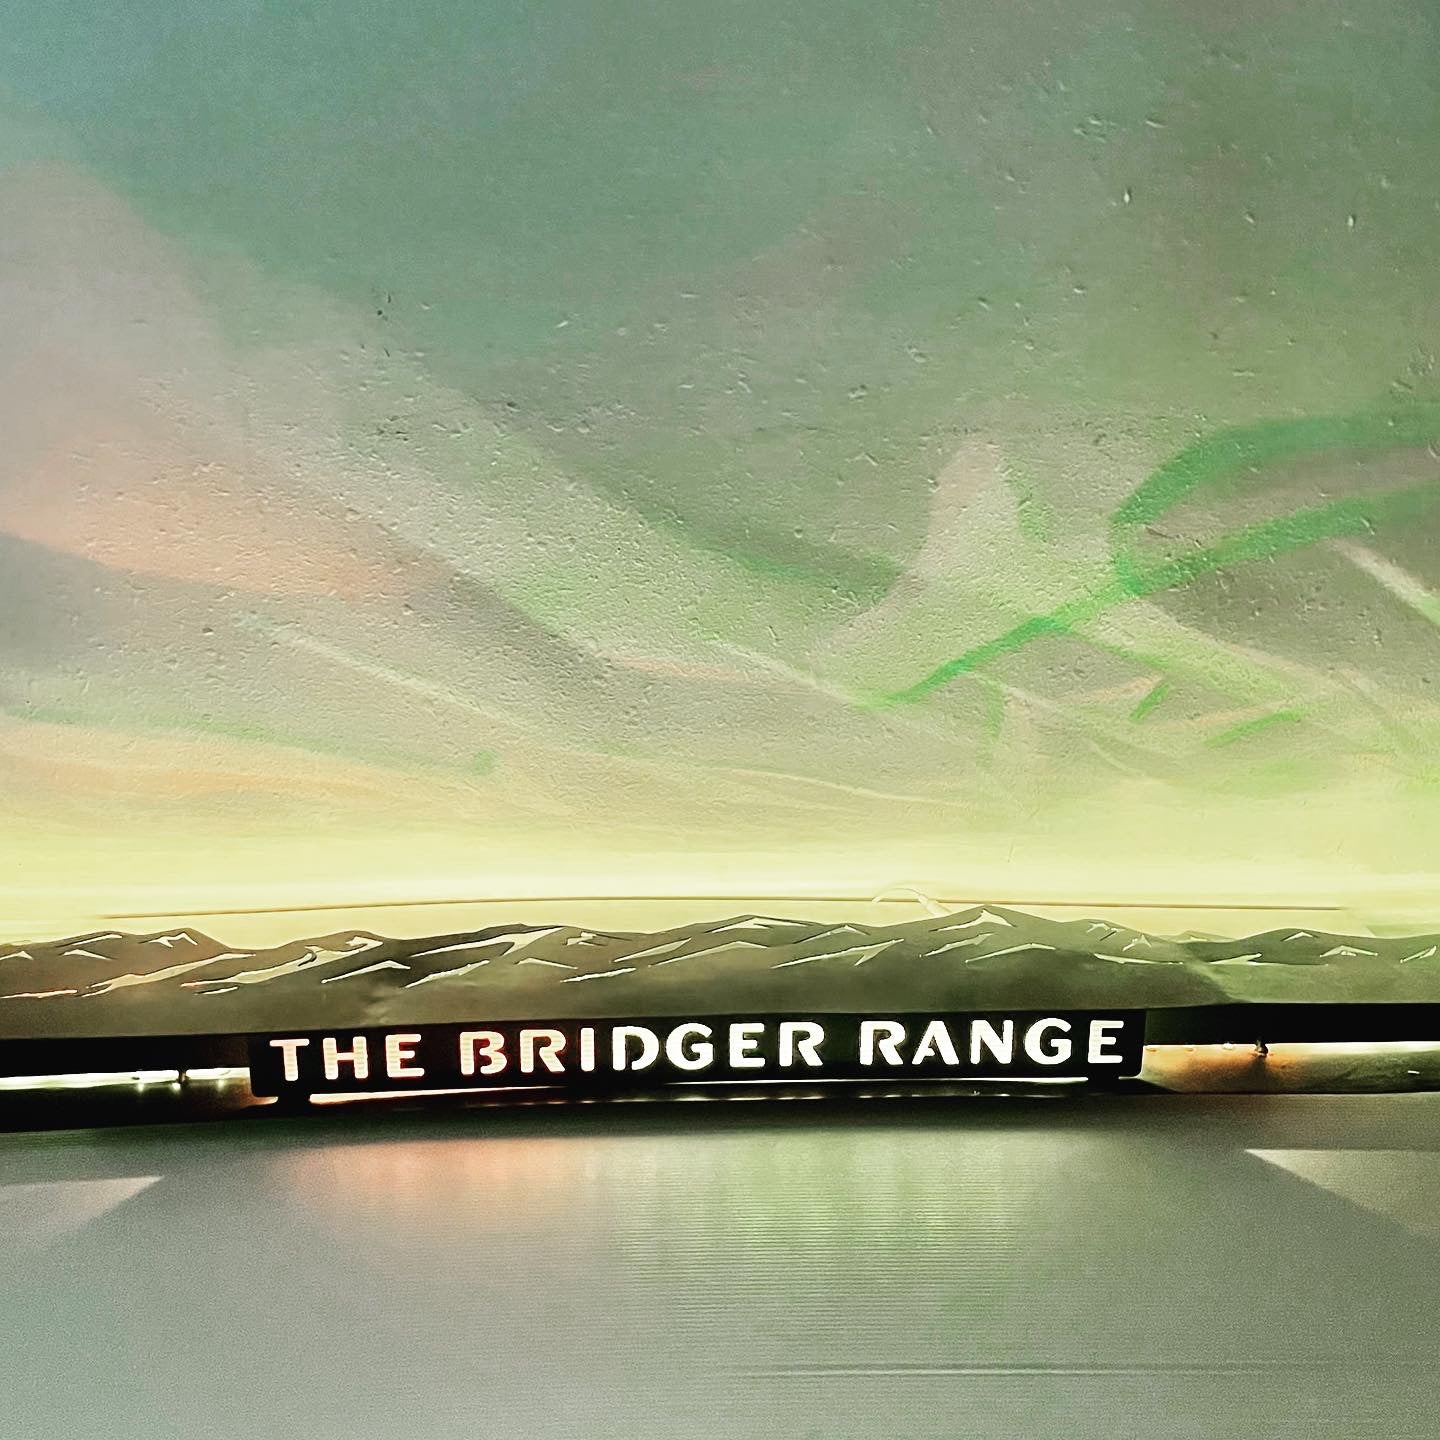 The Bridger Range